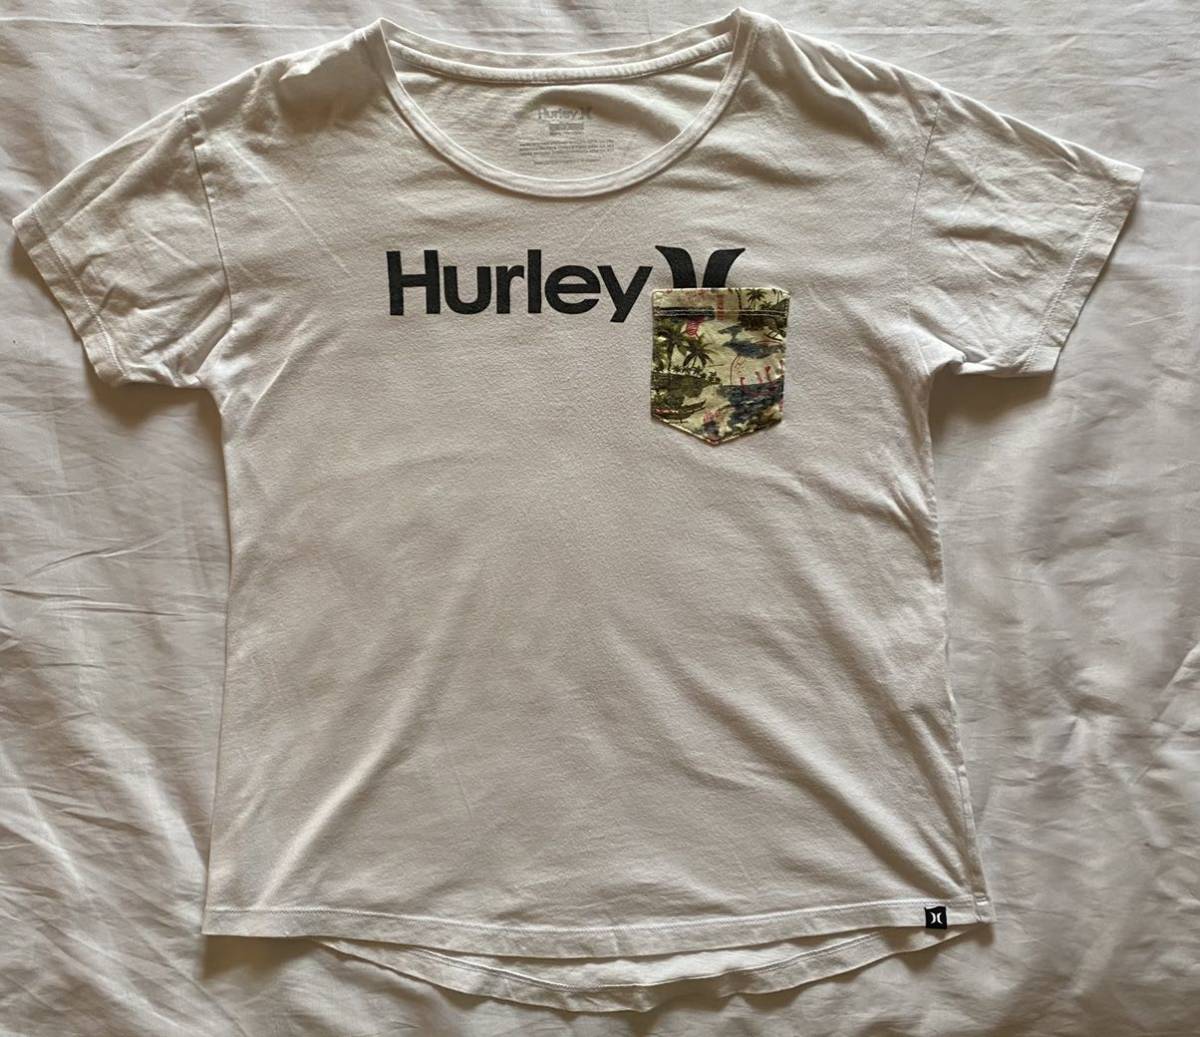 Hurley Harley T-shirt short sleeves . pocket white size S